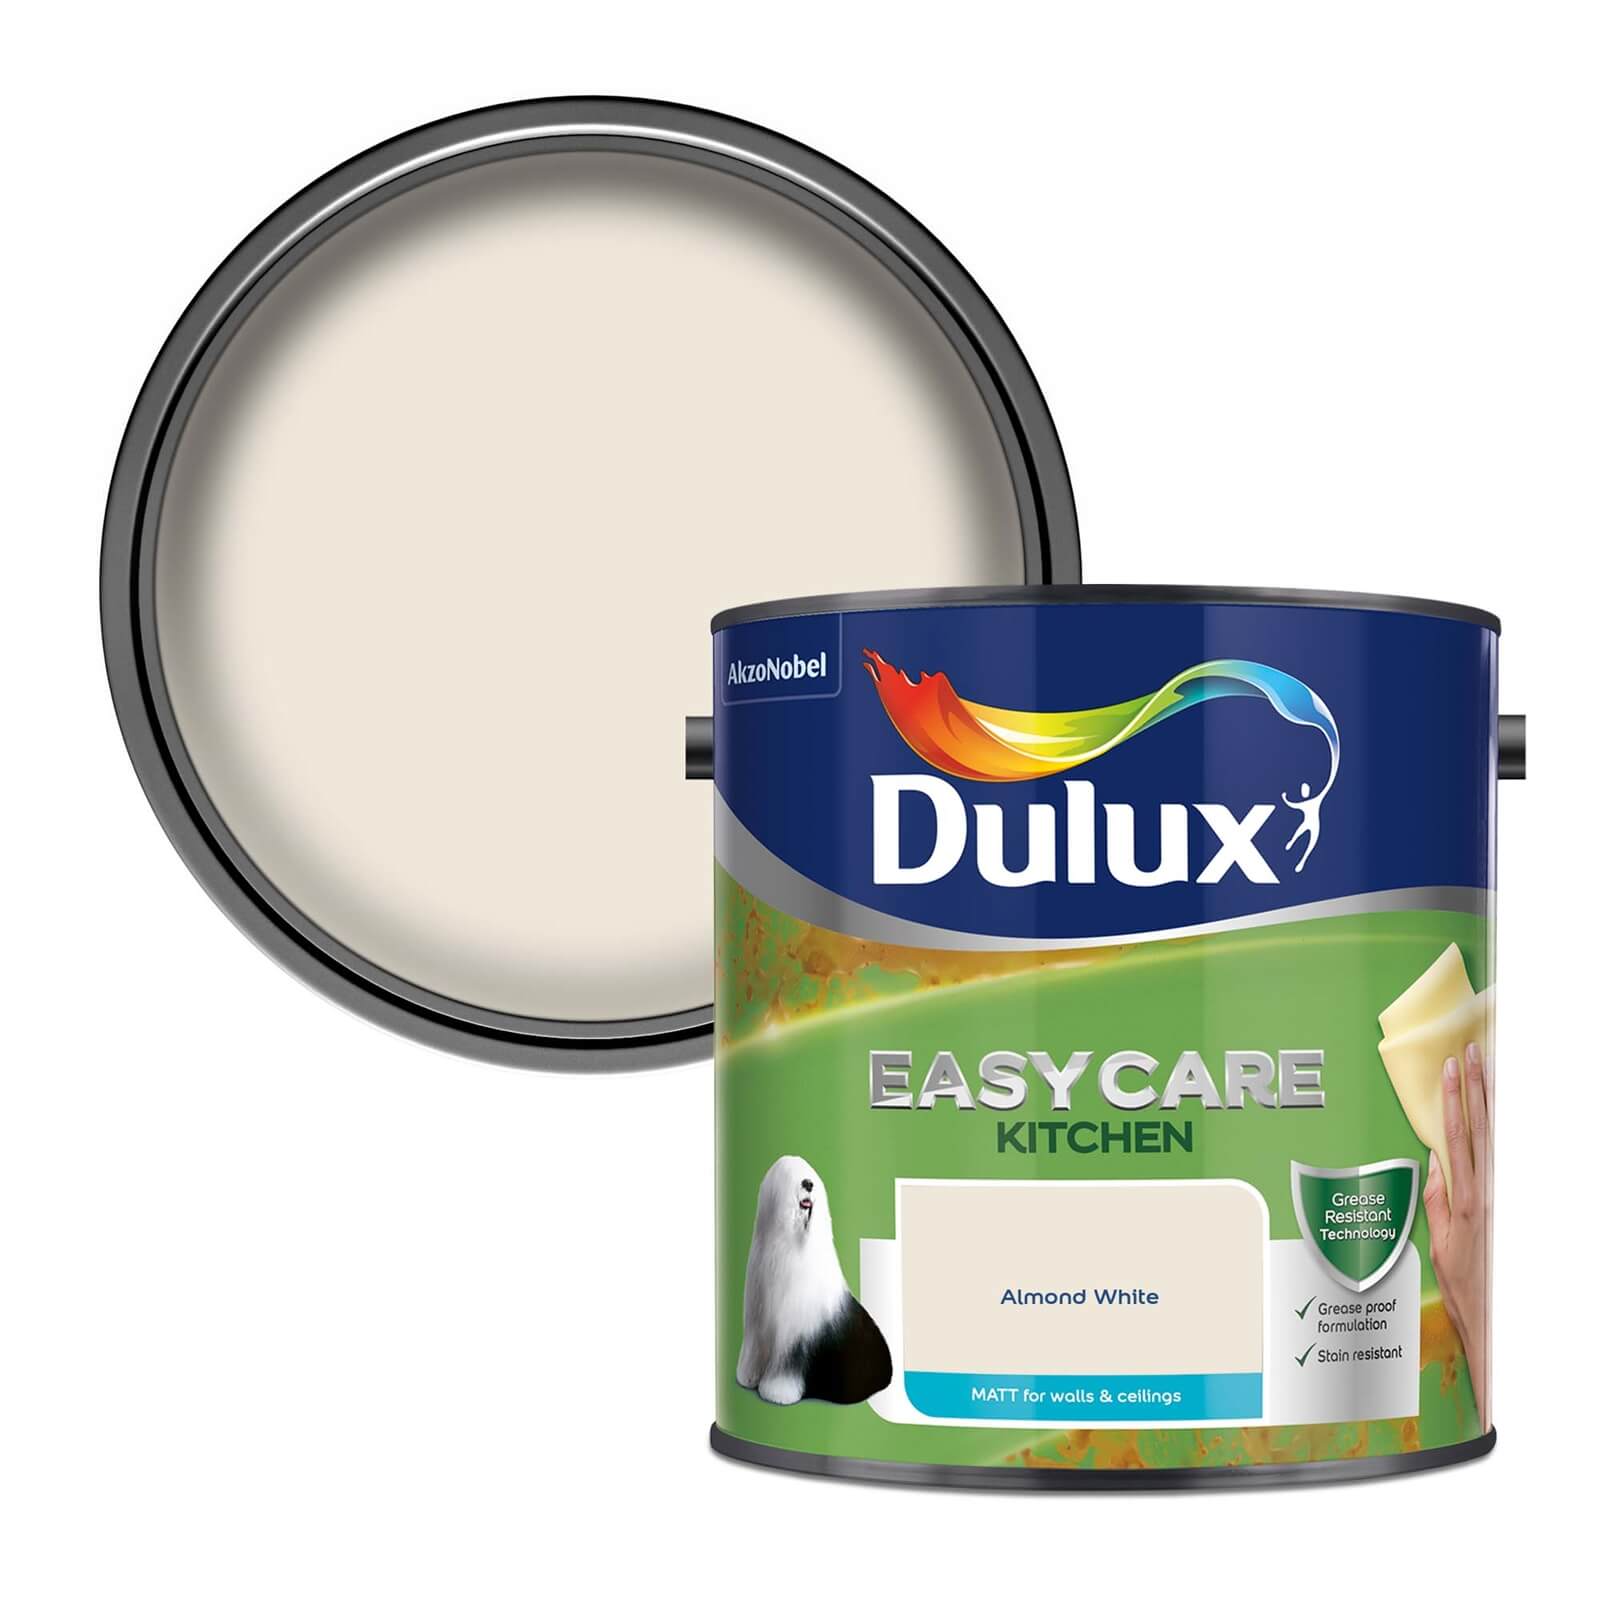 Dulux Easycare Kitchen Almond White Matt Paint - 2.5L